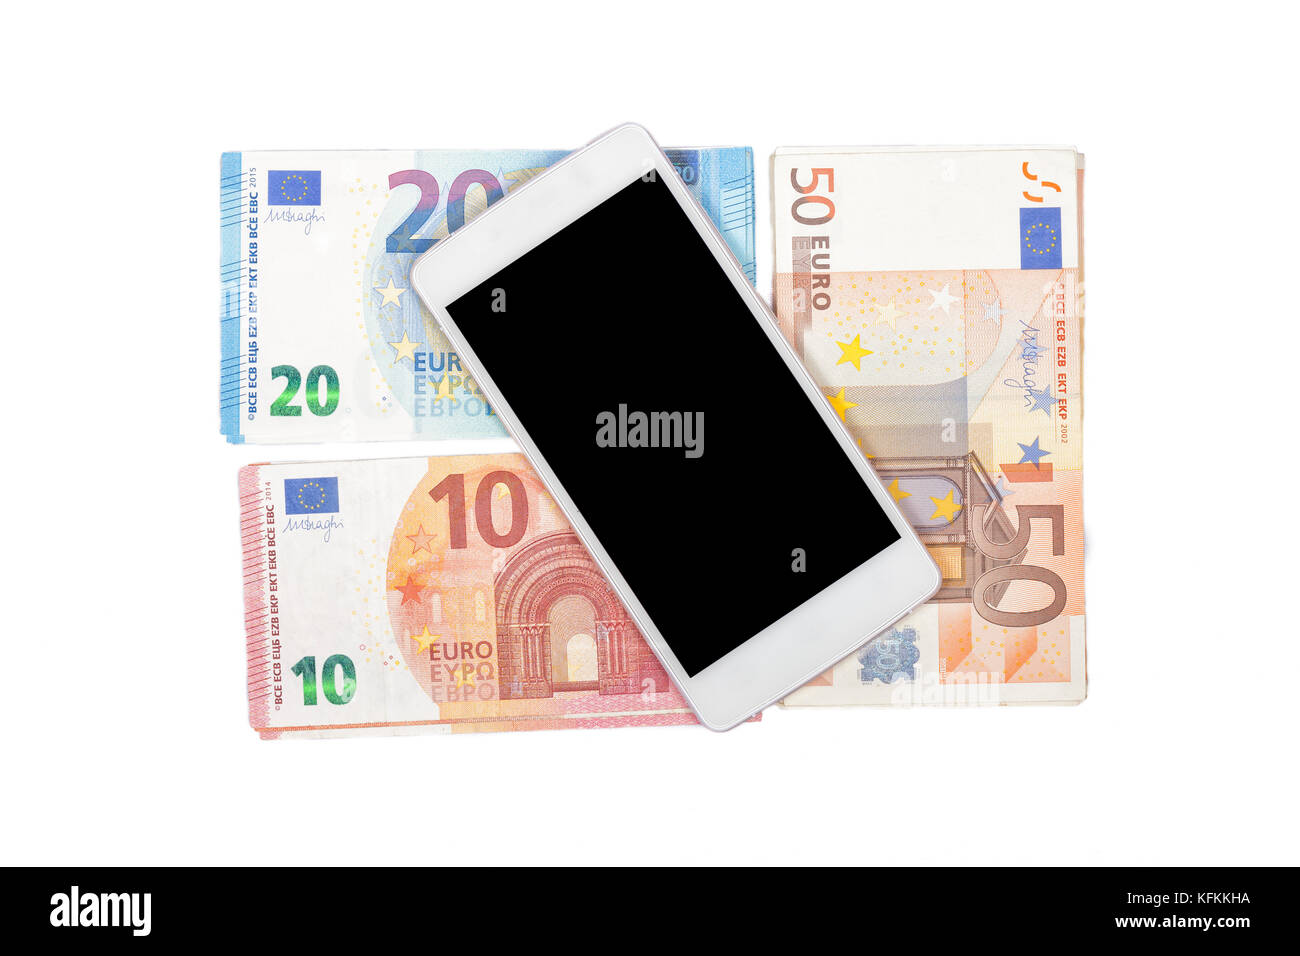 Money and phone on white background. Stock Photo